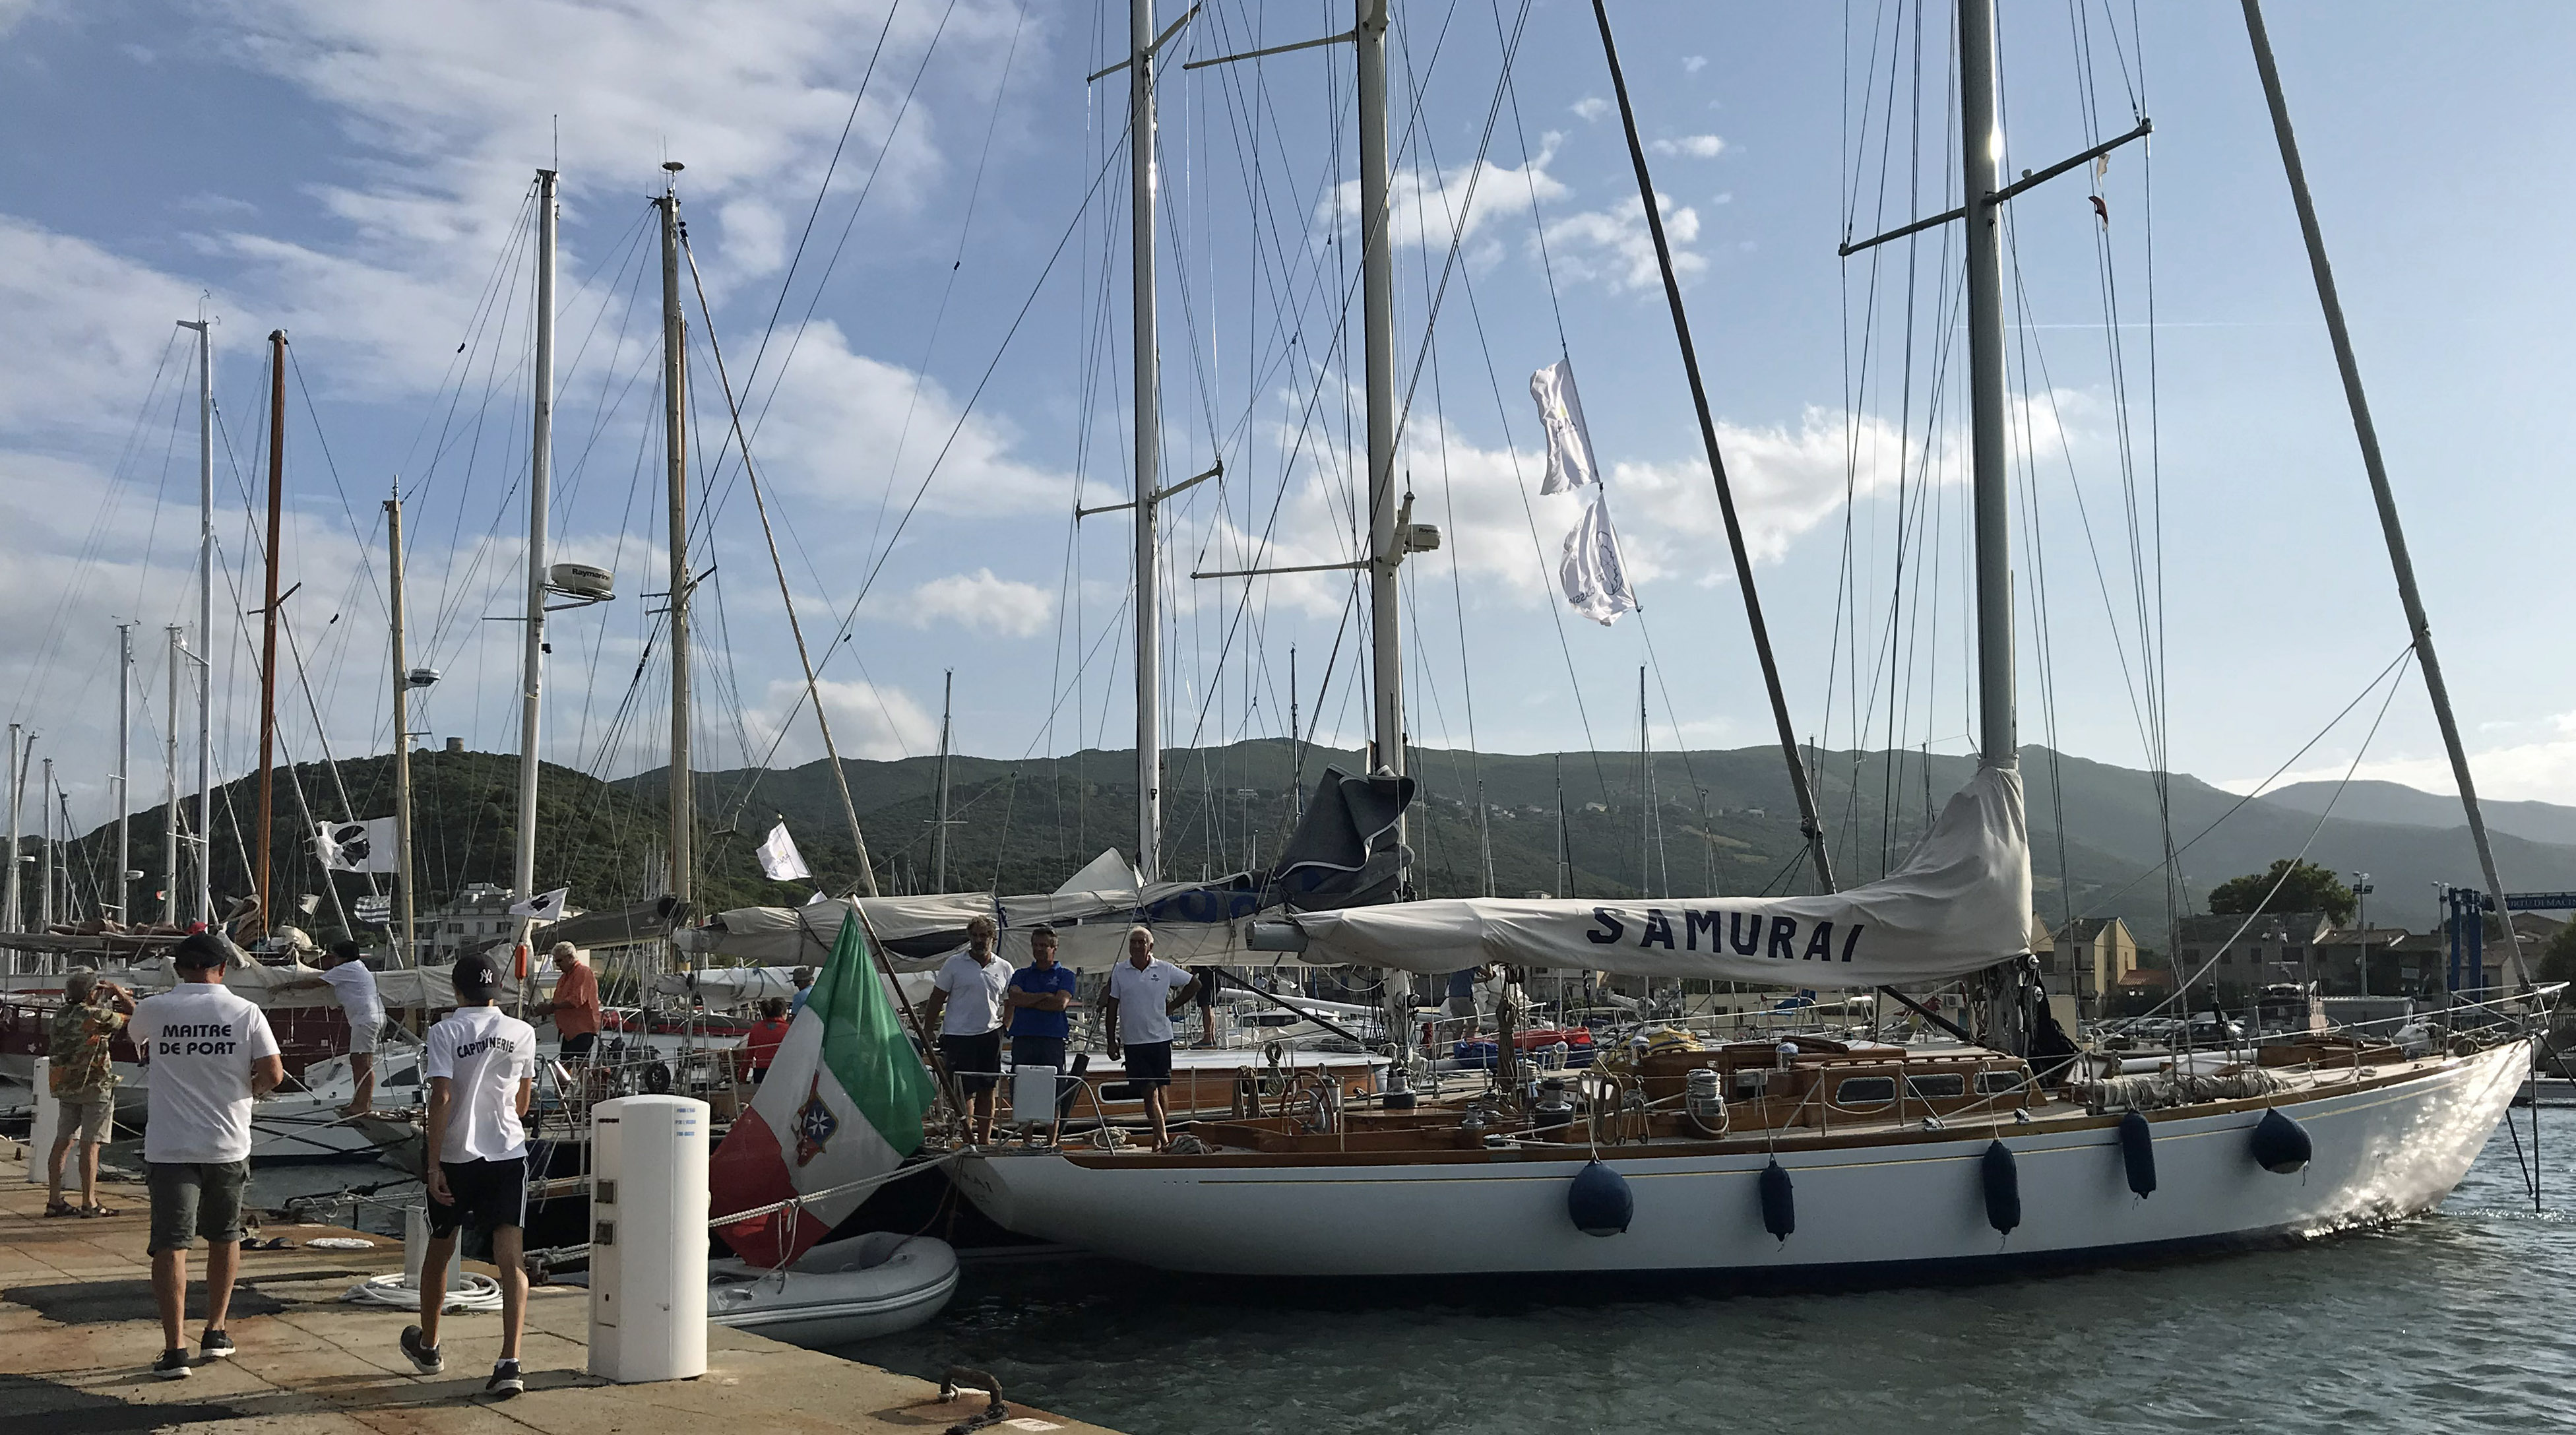 CC 2018 Bastia - Macinaggio la flotte au port de Macinaggio photo Thibaud Assante DR